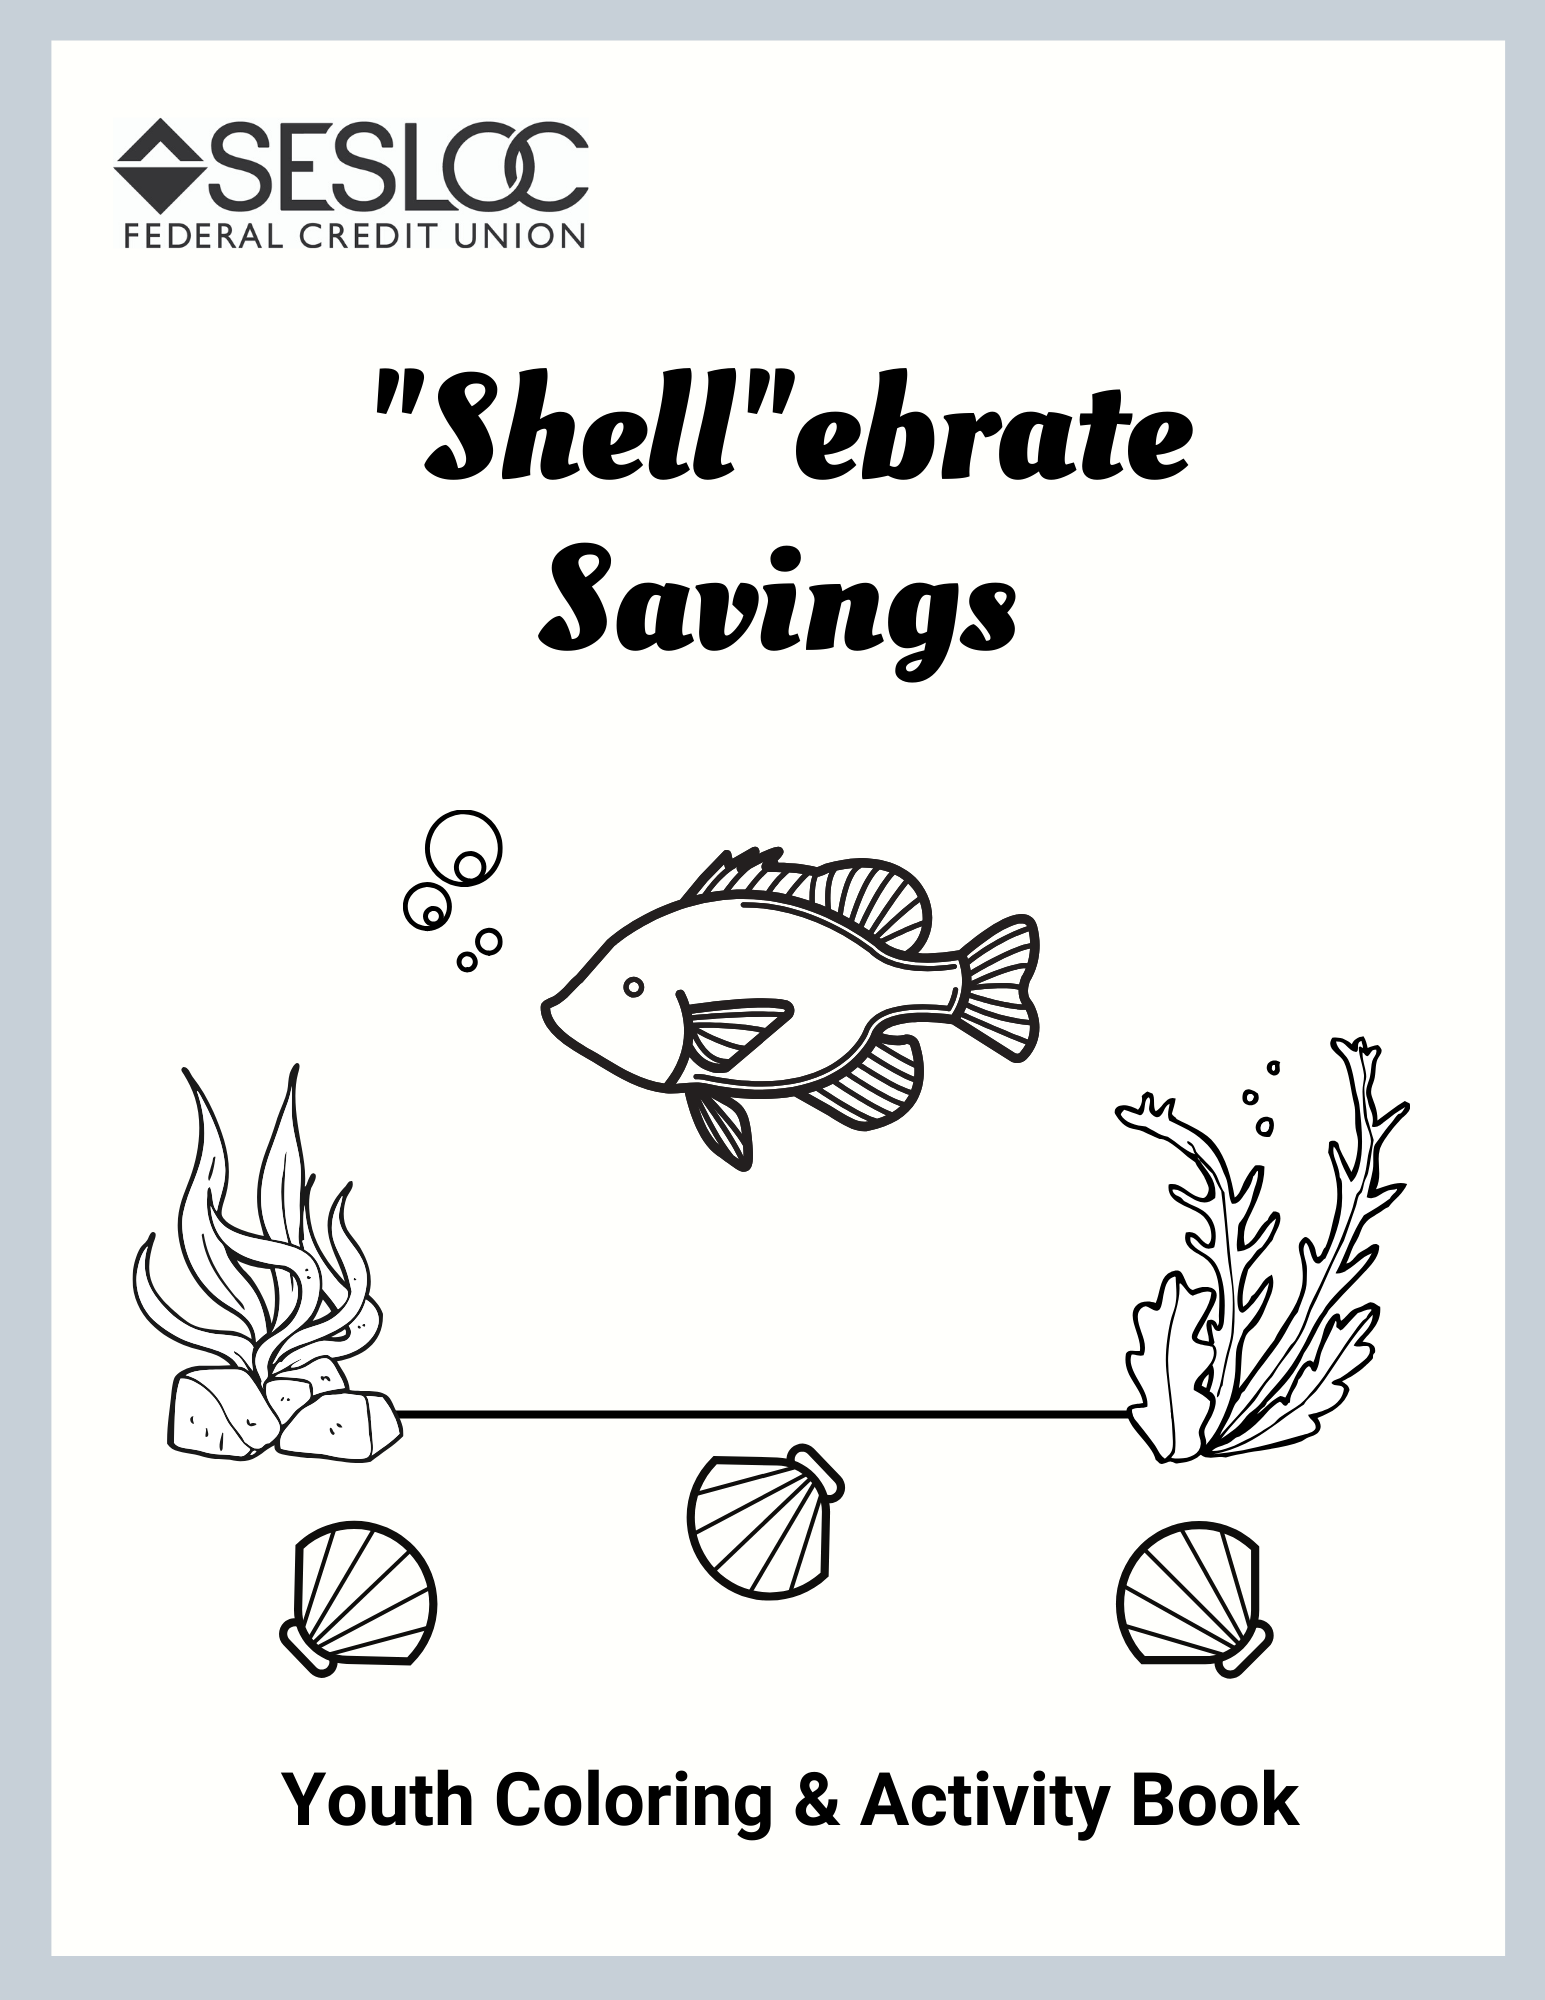 "Shell"ebrate Savings